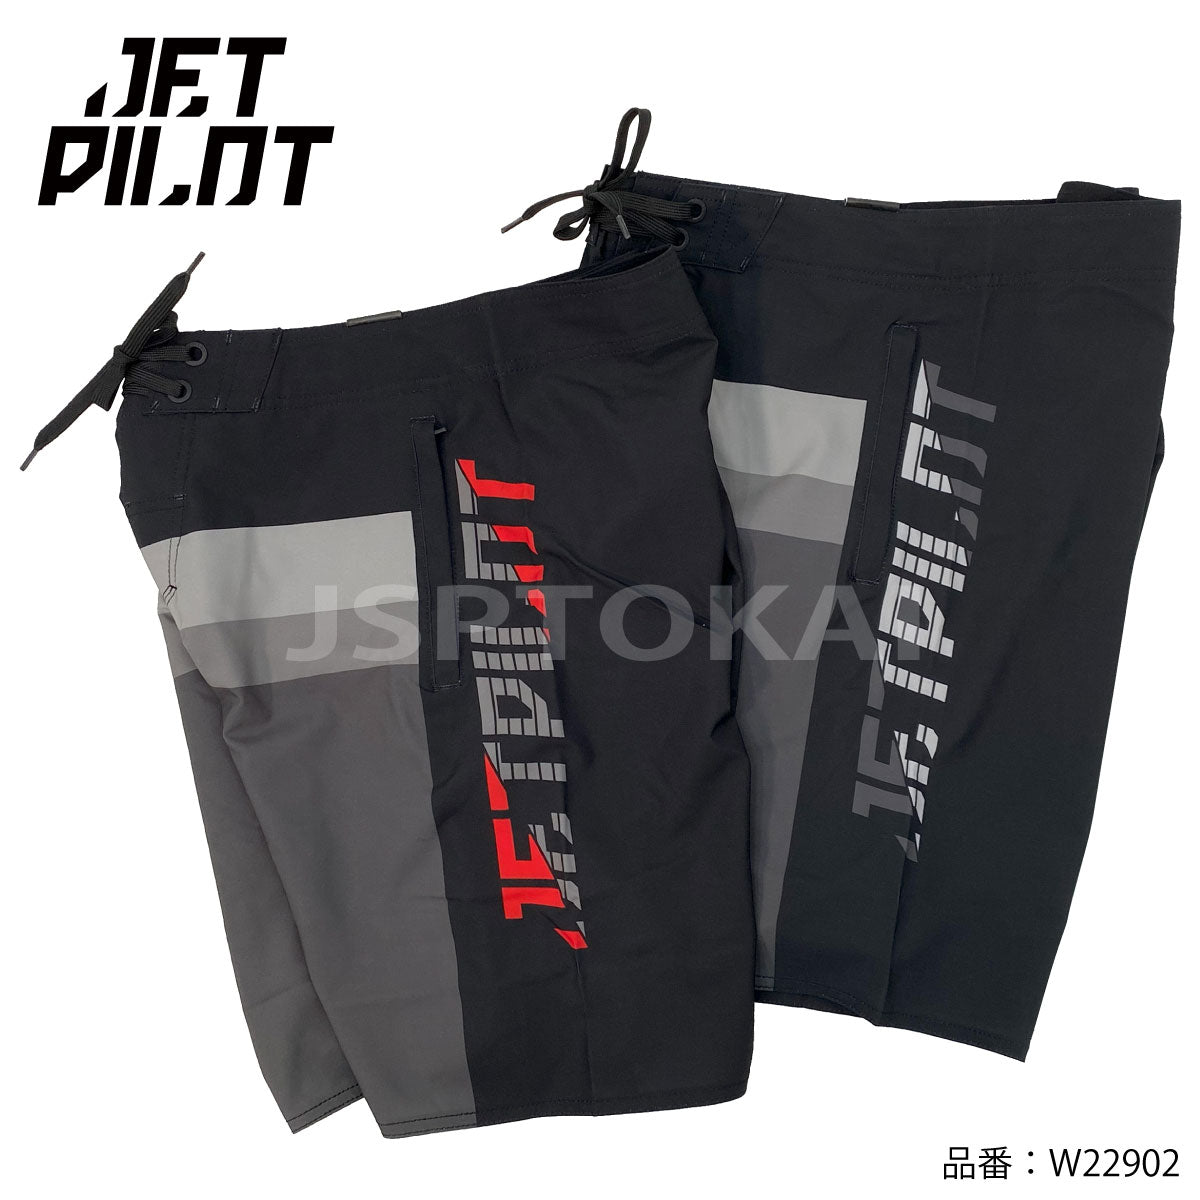 [SALE] JETPILOT Jet Pilot SPCICER BS MEN'S BOARDSHORT Men's W22902